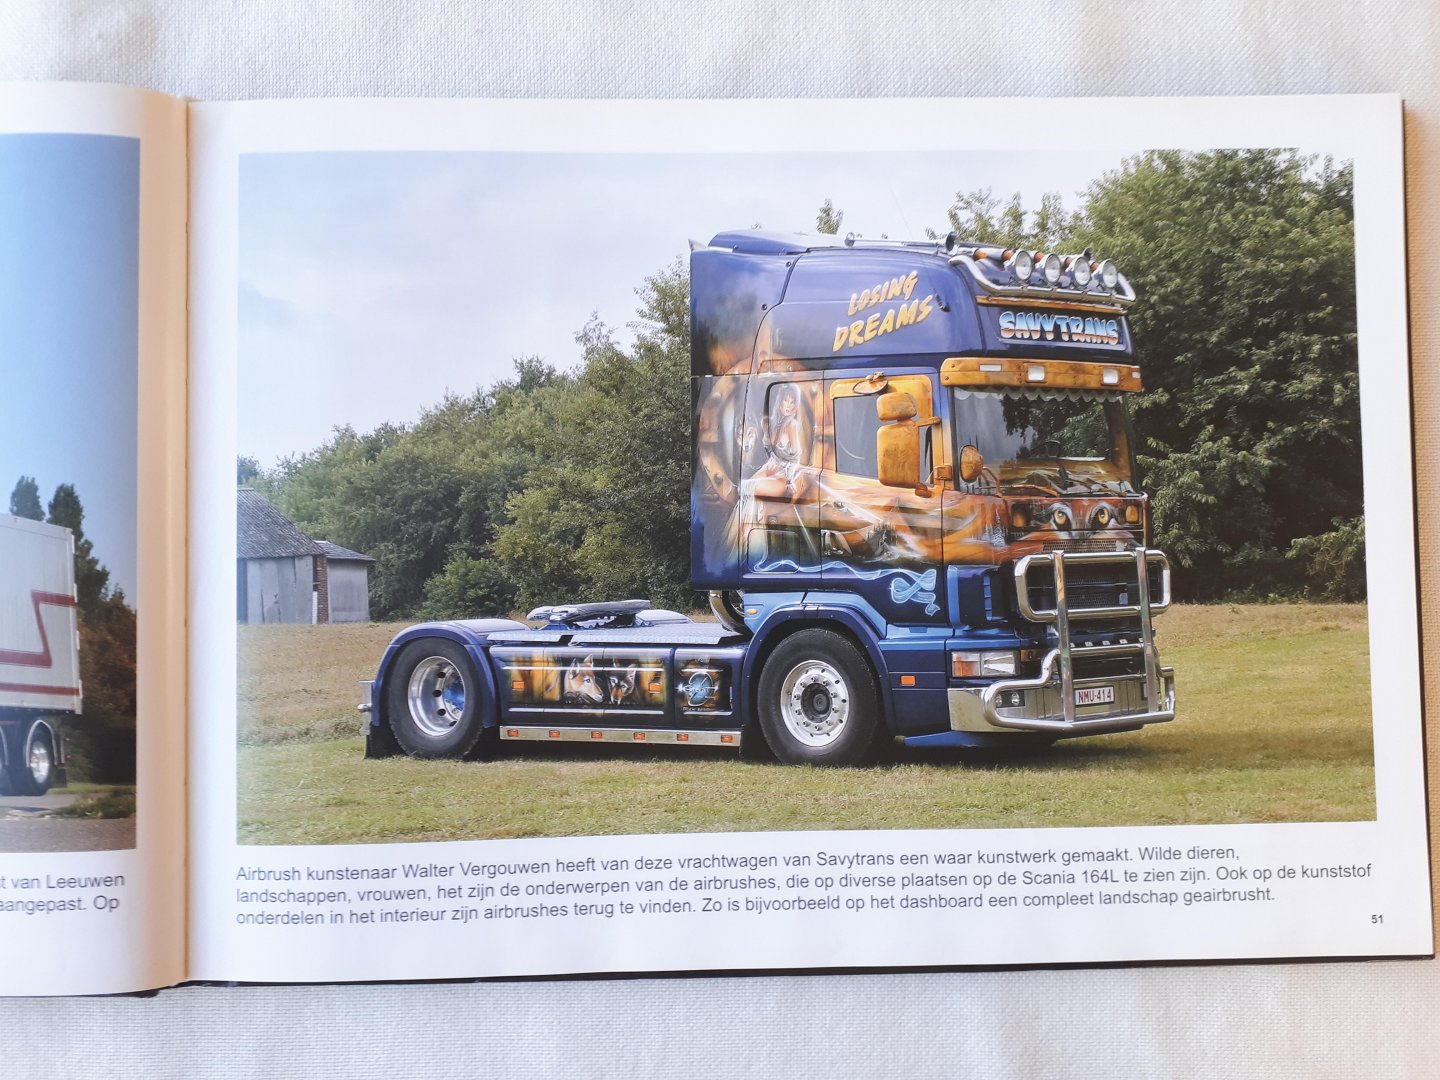 Hartog, W. den - The Art of Truckstyling